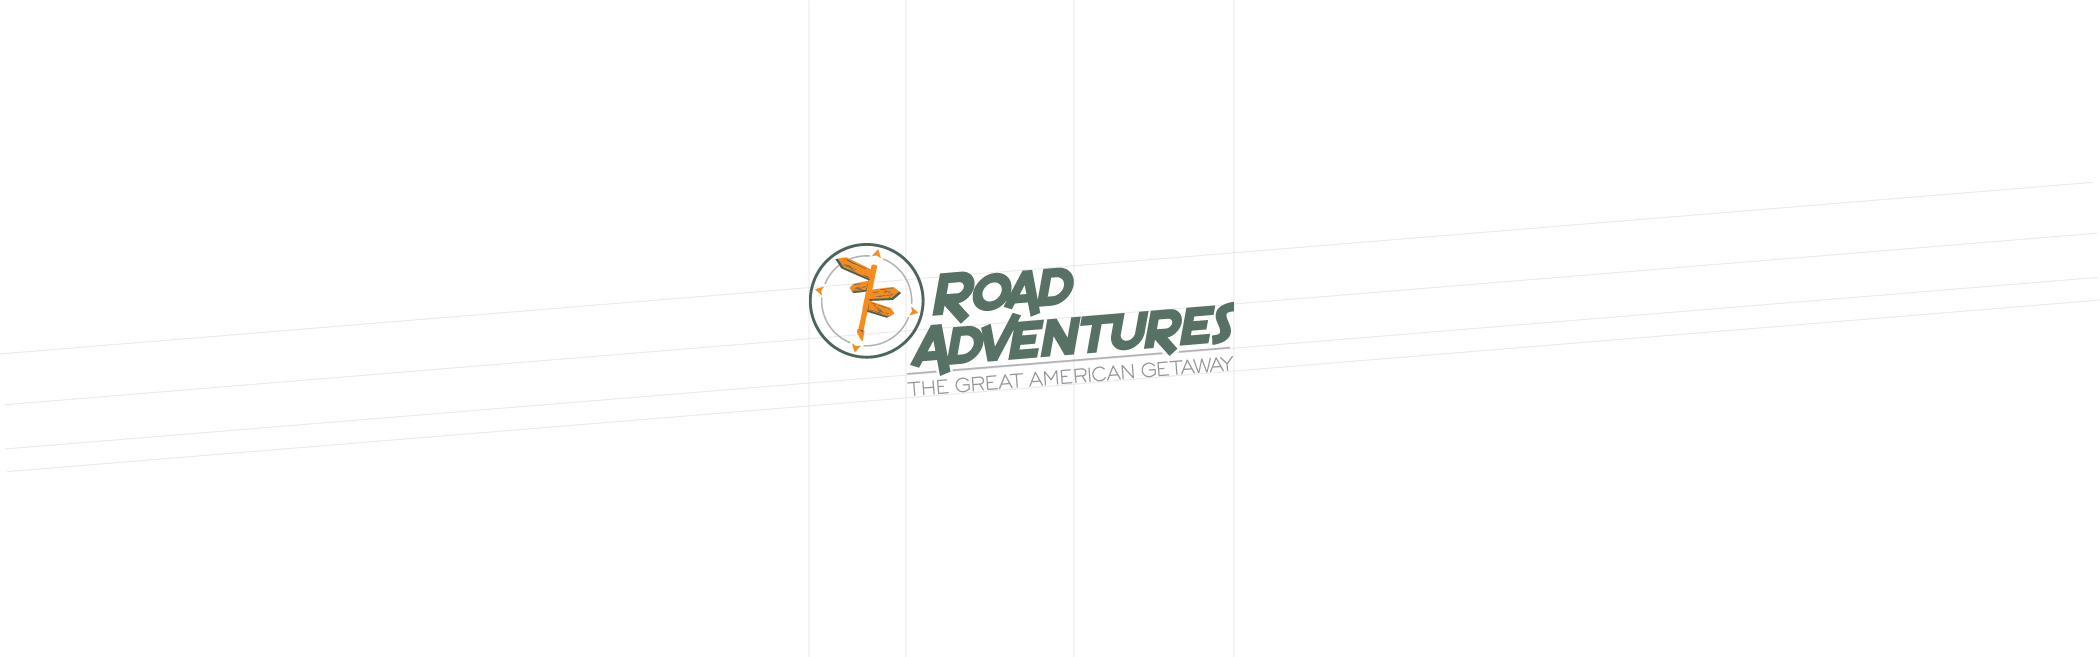 Road Adventures - logo